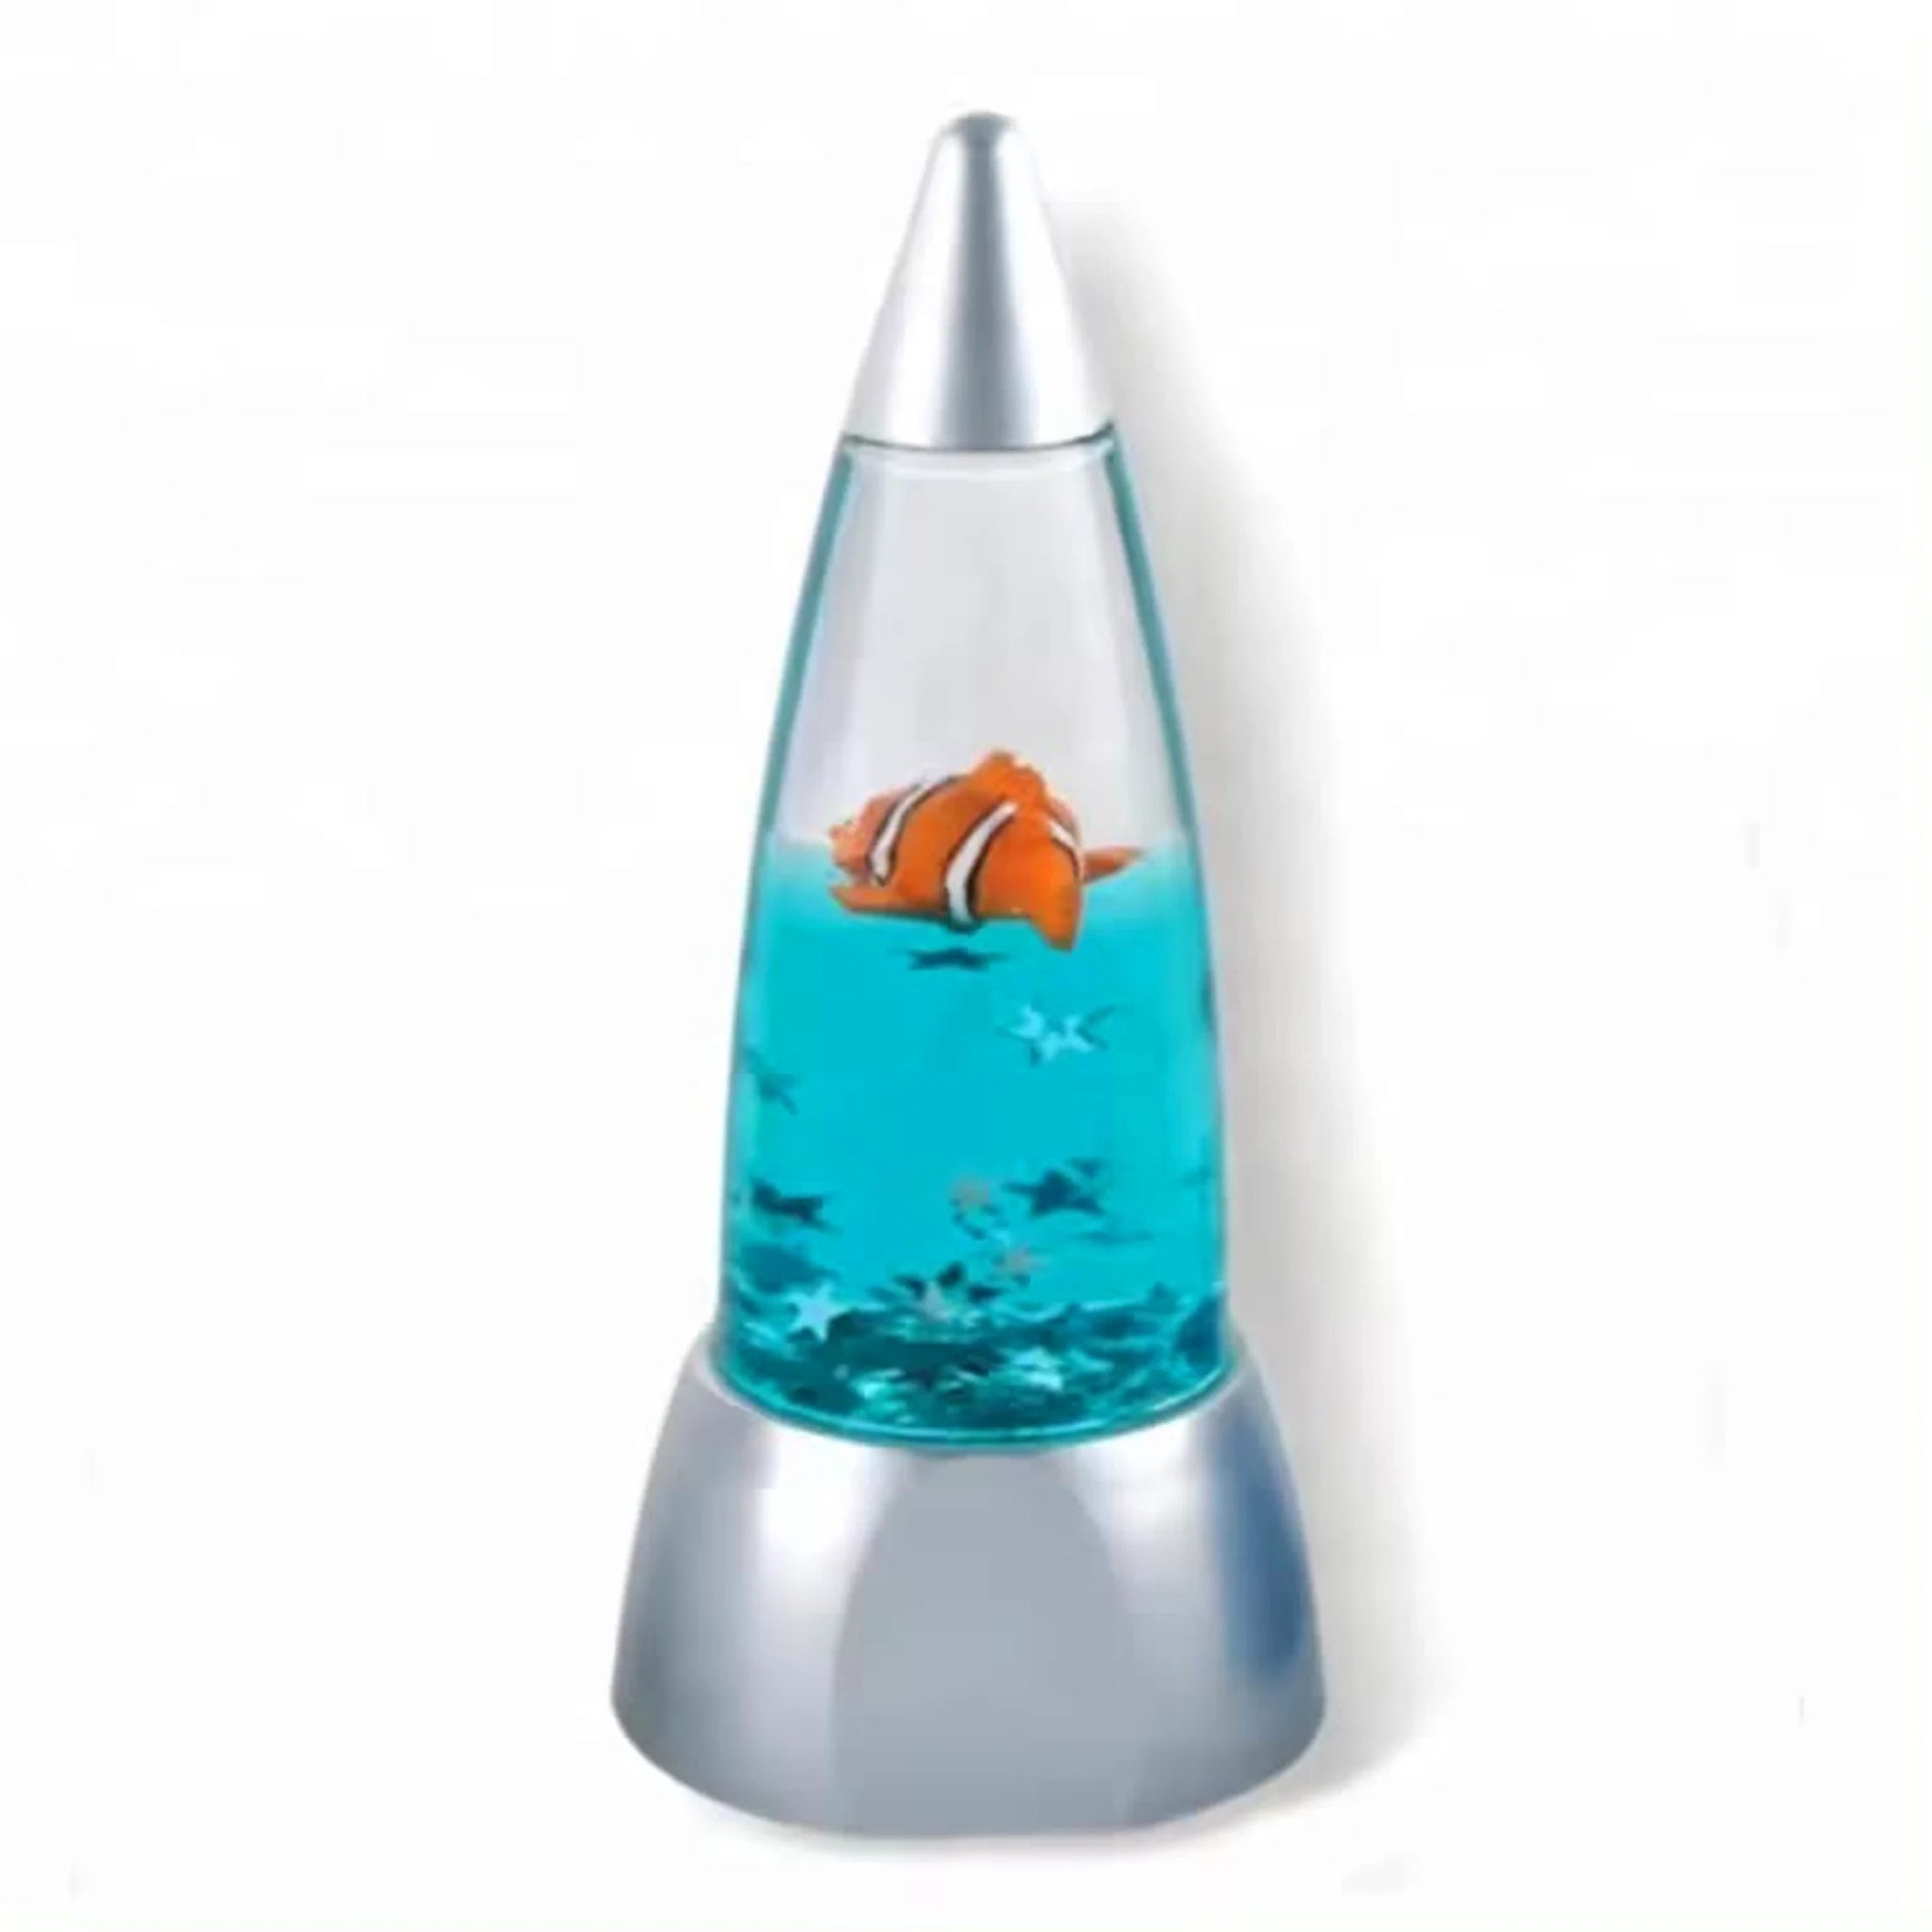 Frutiger Aero Lava Lamp with Liquid and Floating Clownfish